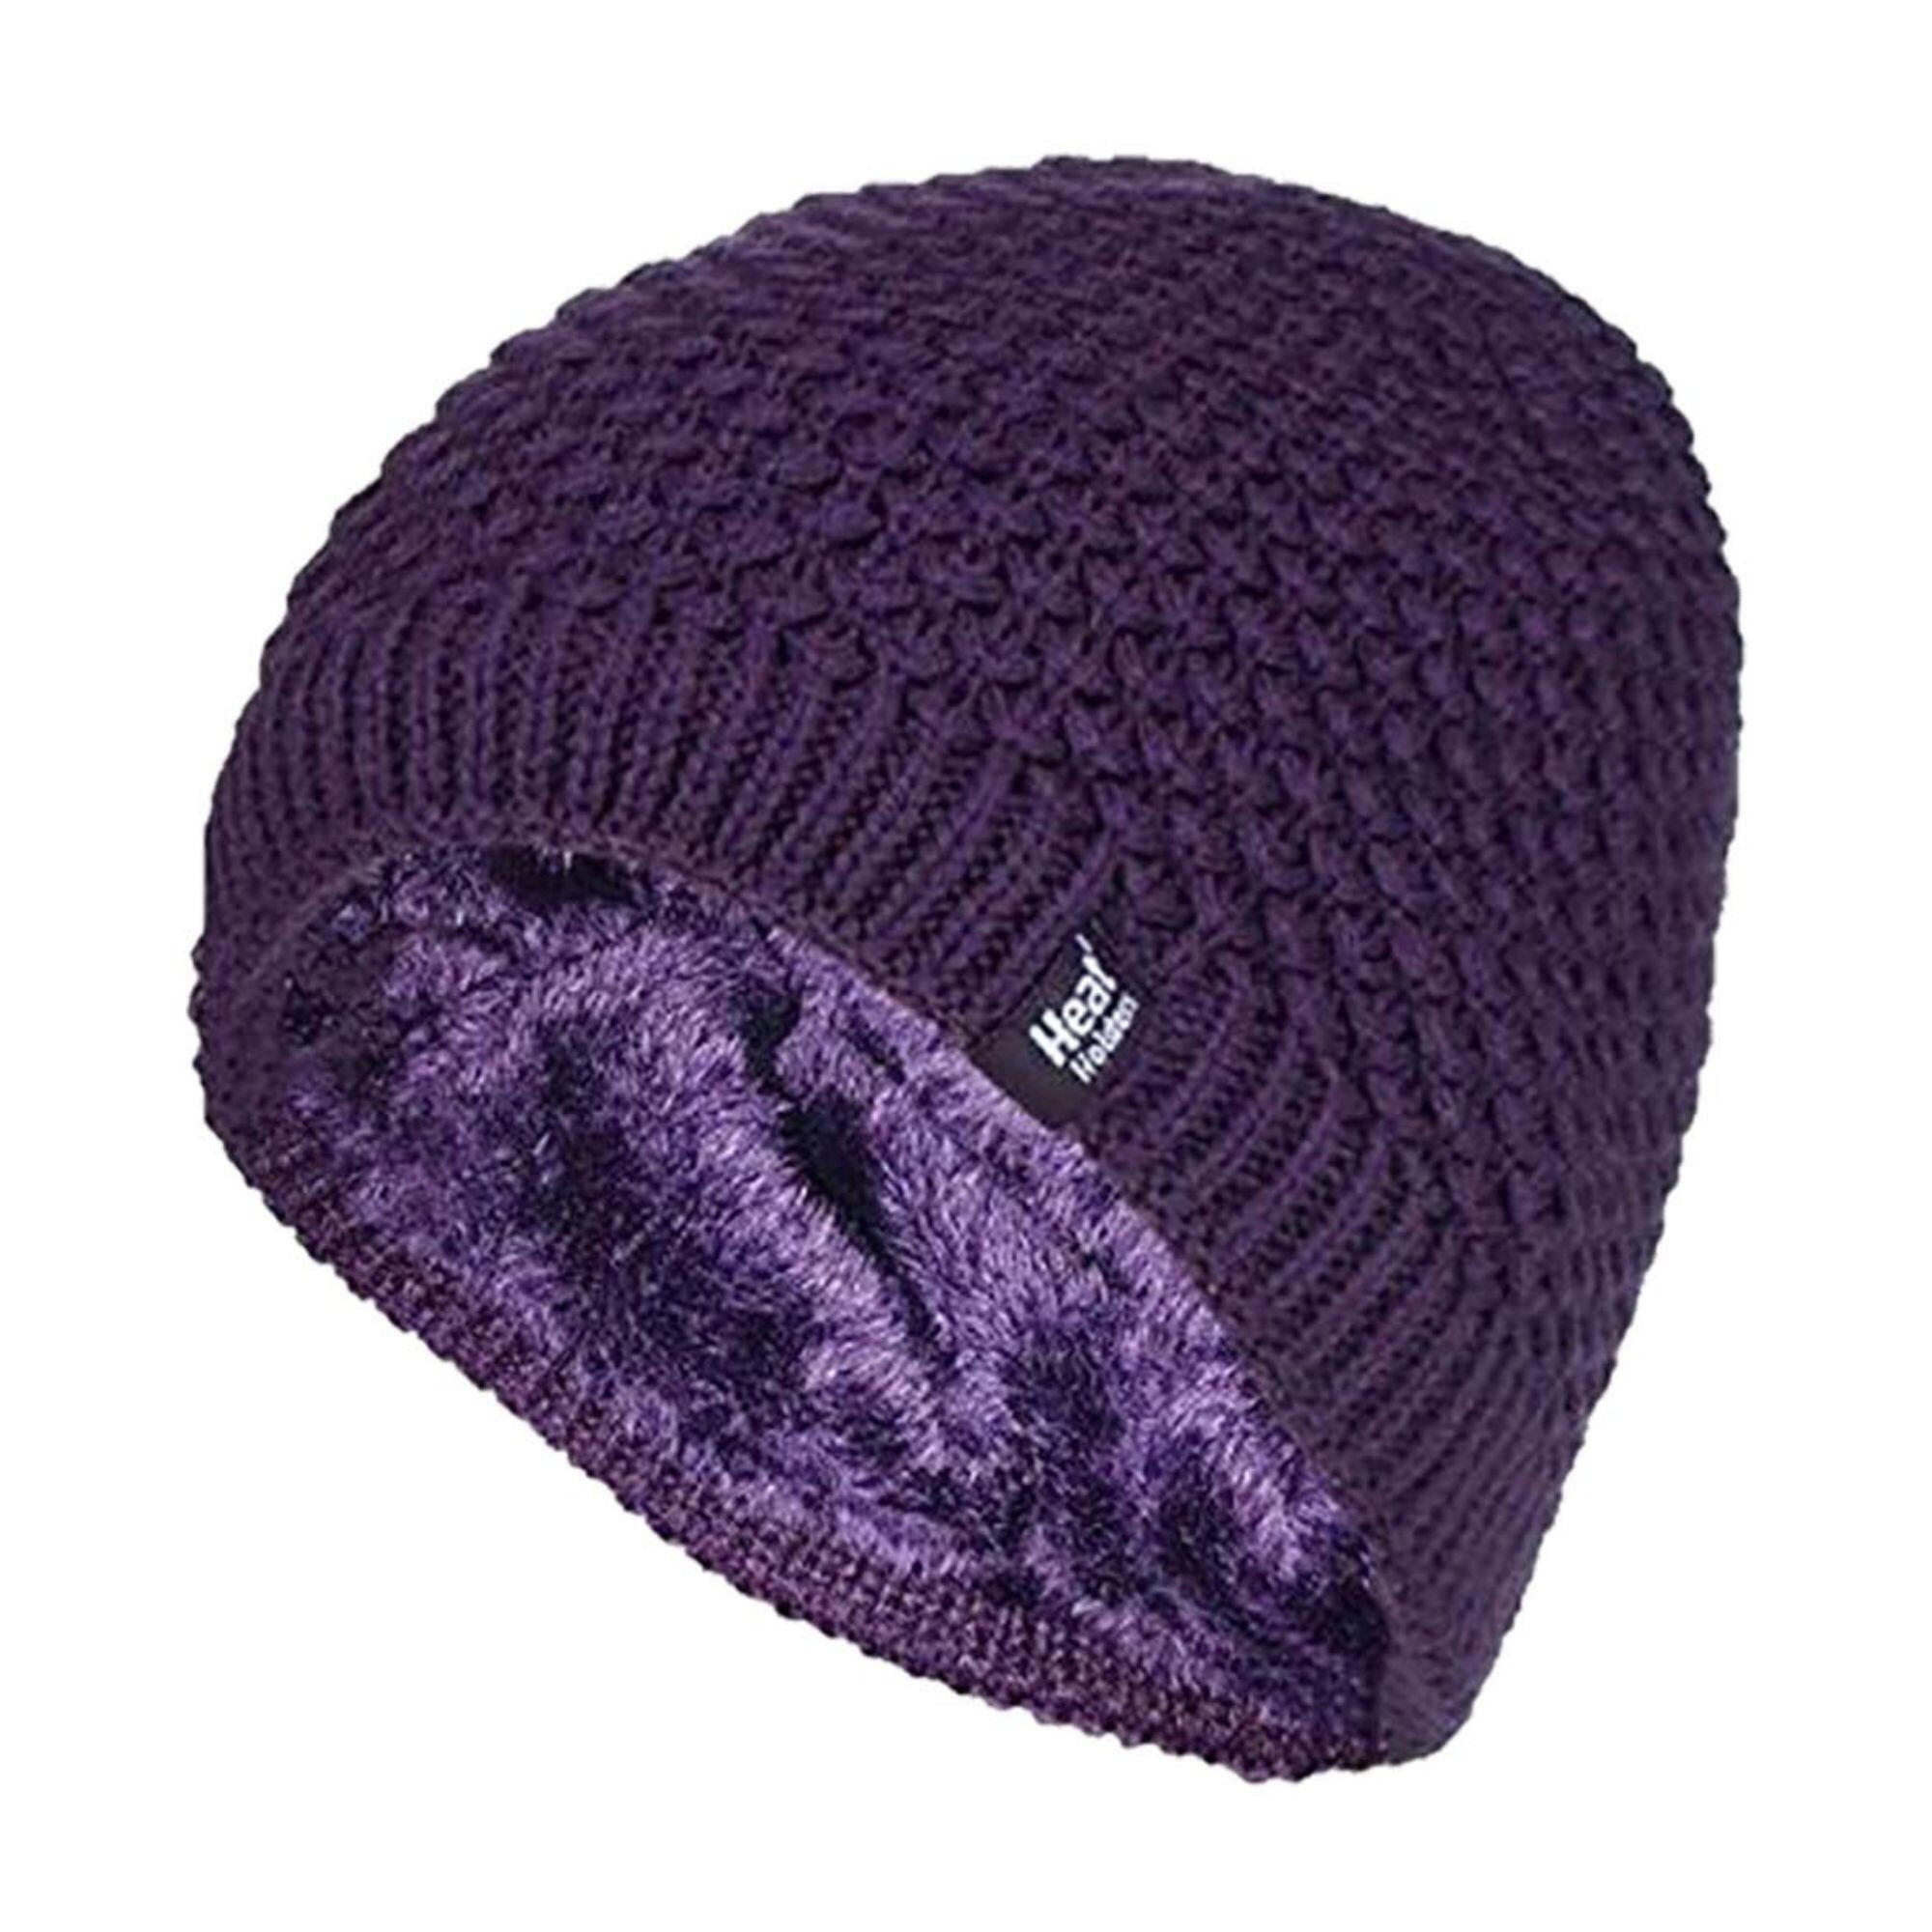 HEAT HOLDERS Ladies Knit Fleece Lined Warm Thermal Beanie Hat